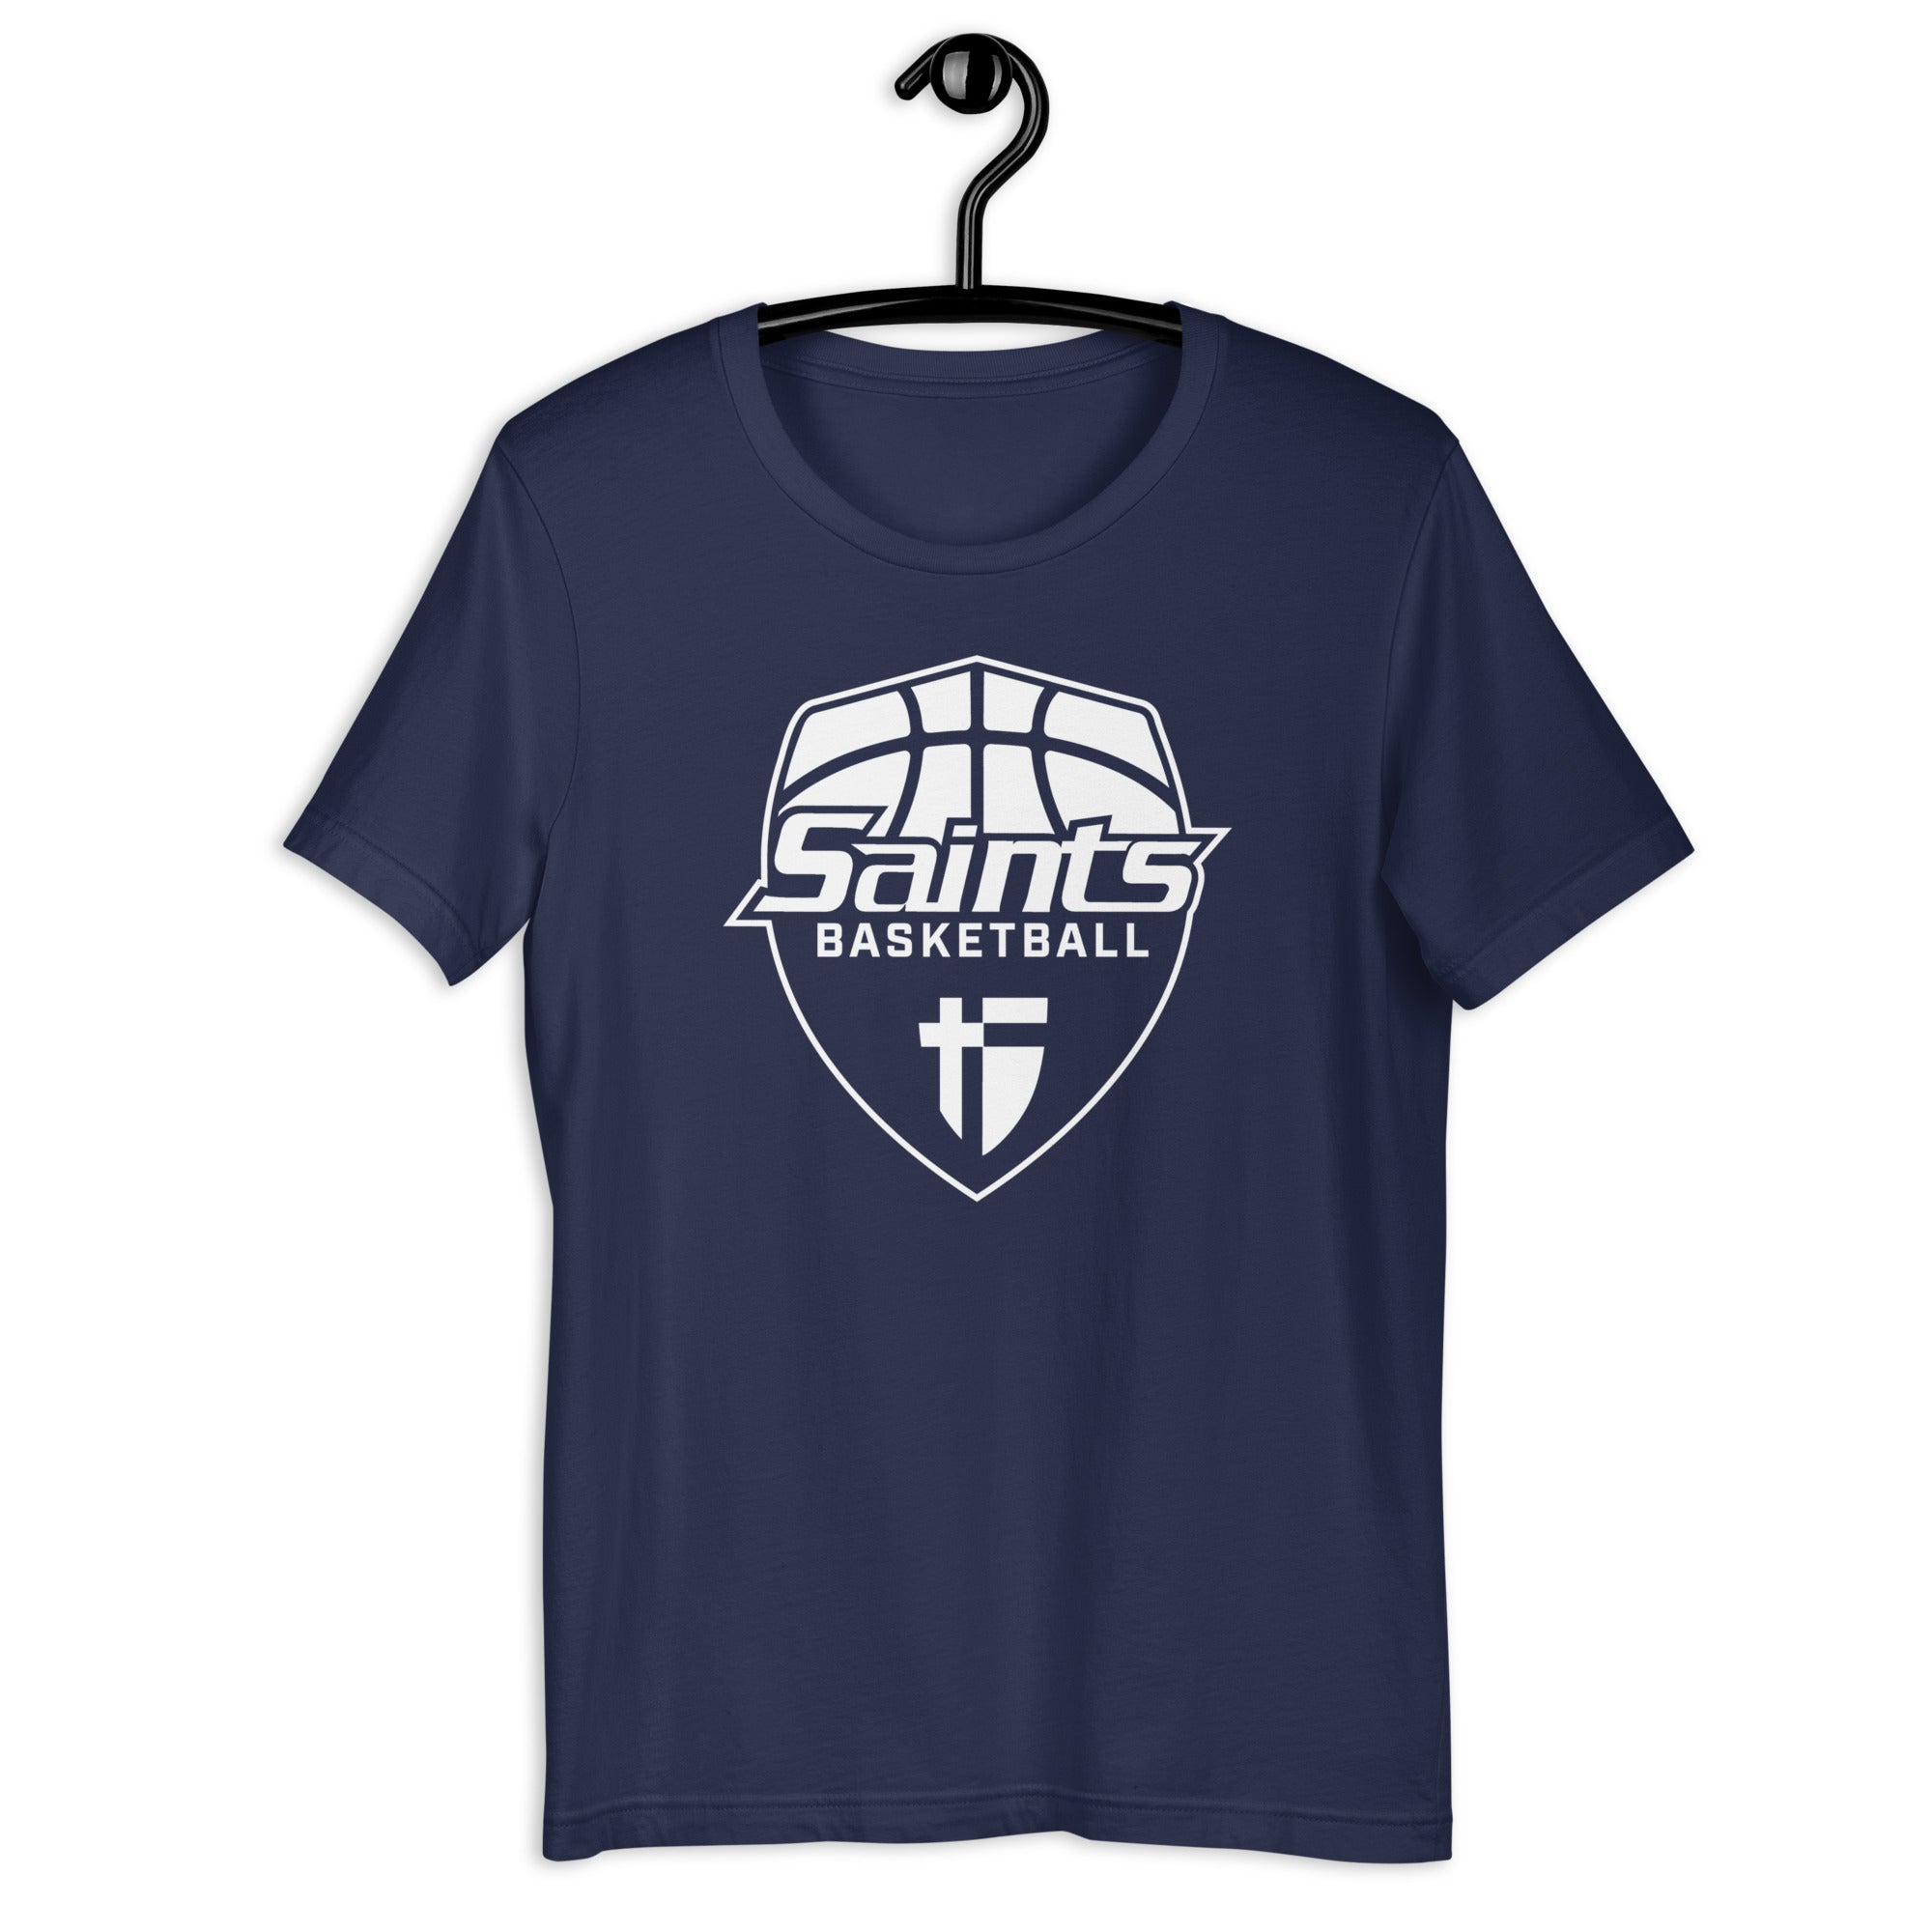 Saints Basketball Navy Unisex t-shirt